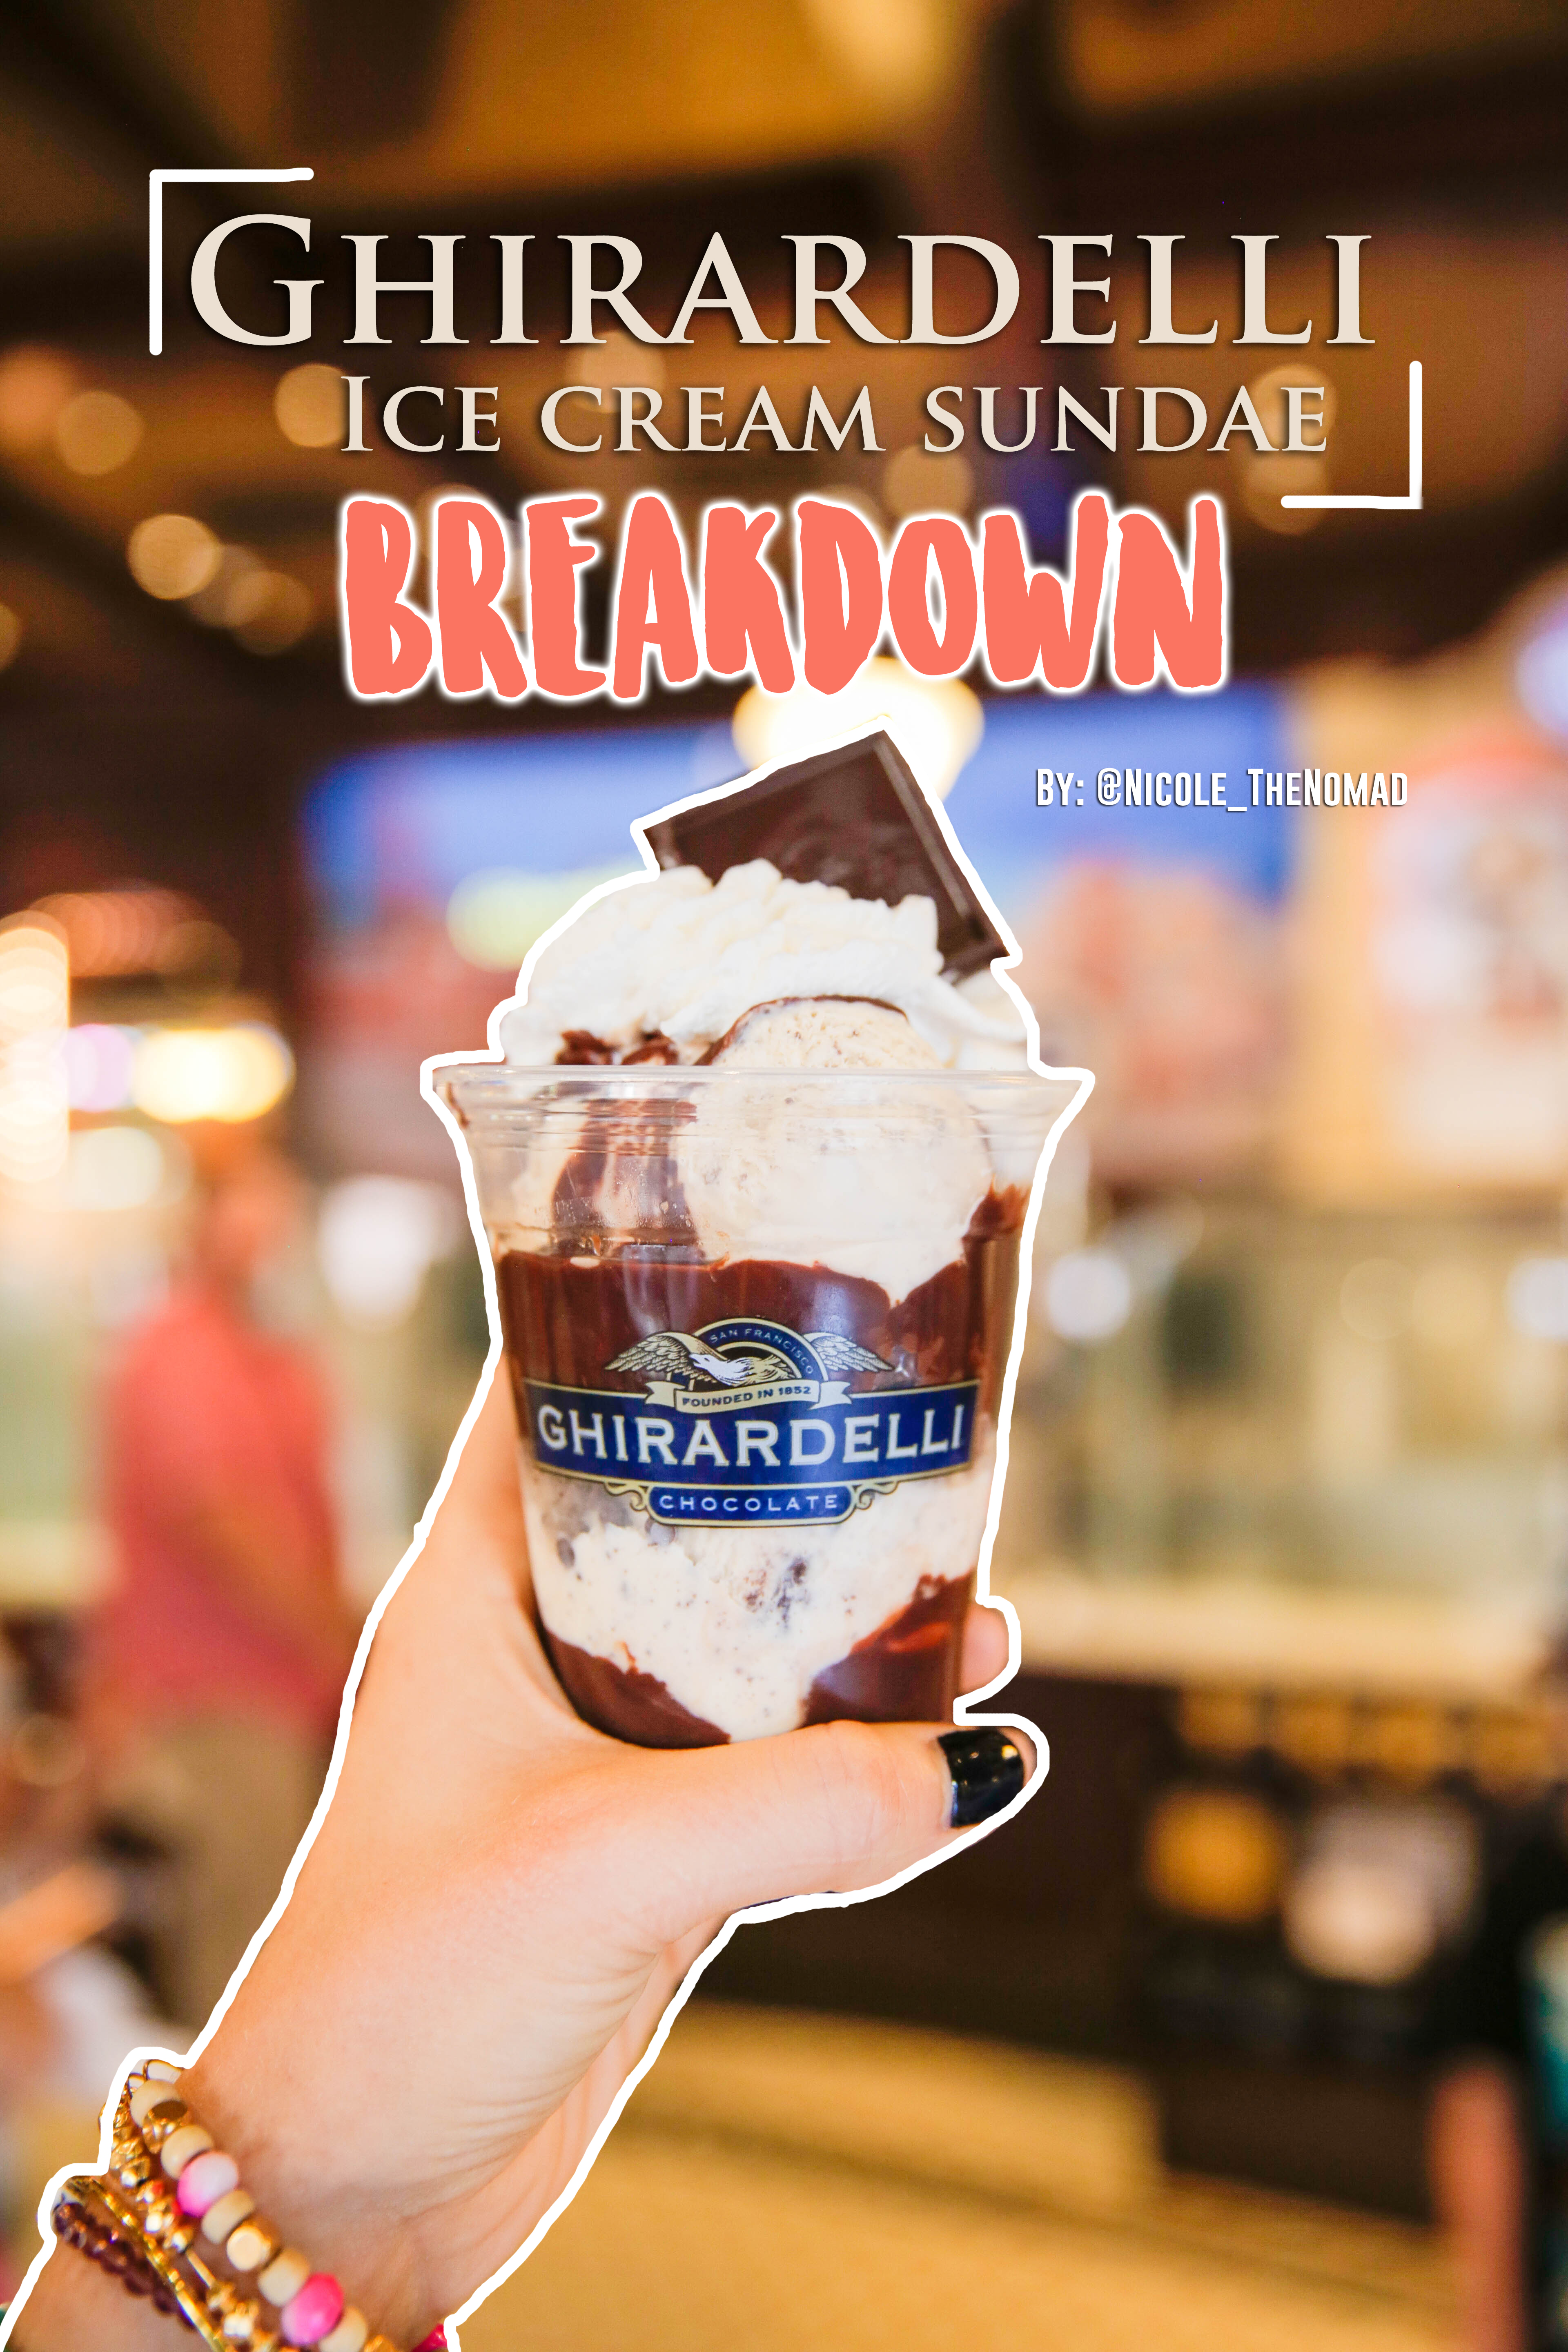 Ghirardelli Ice Cream Sundae Breakdown